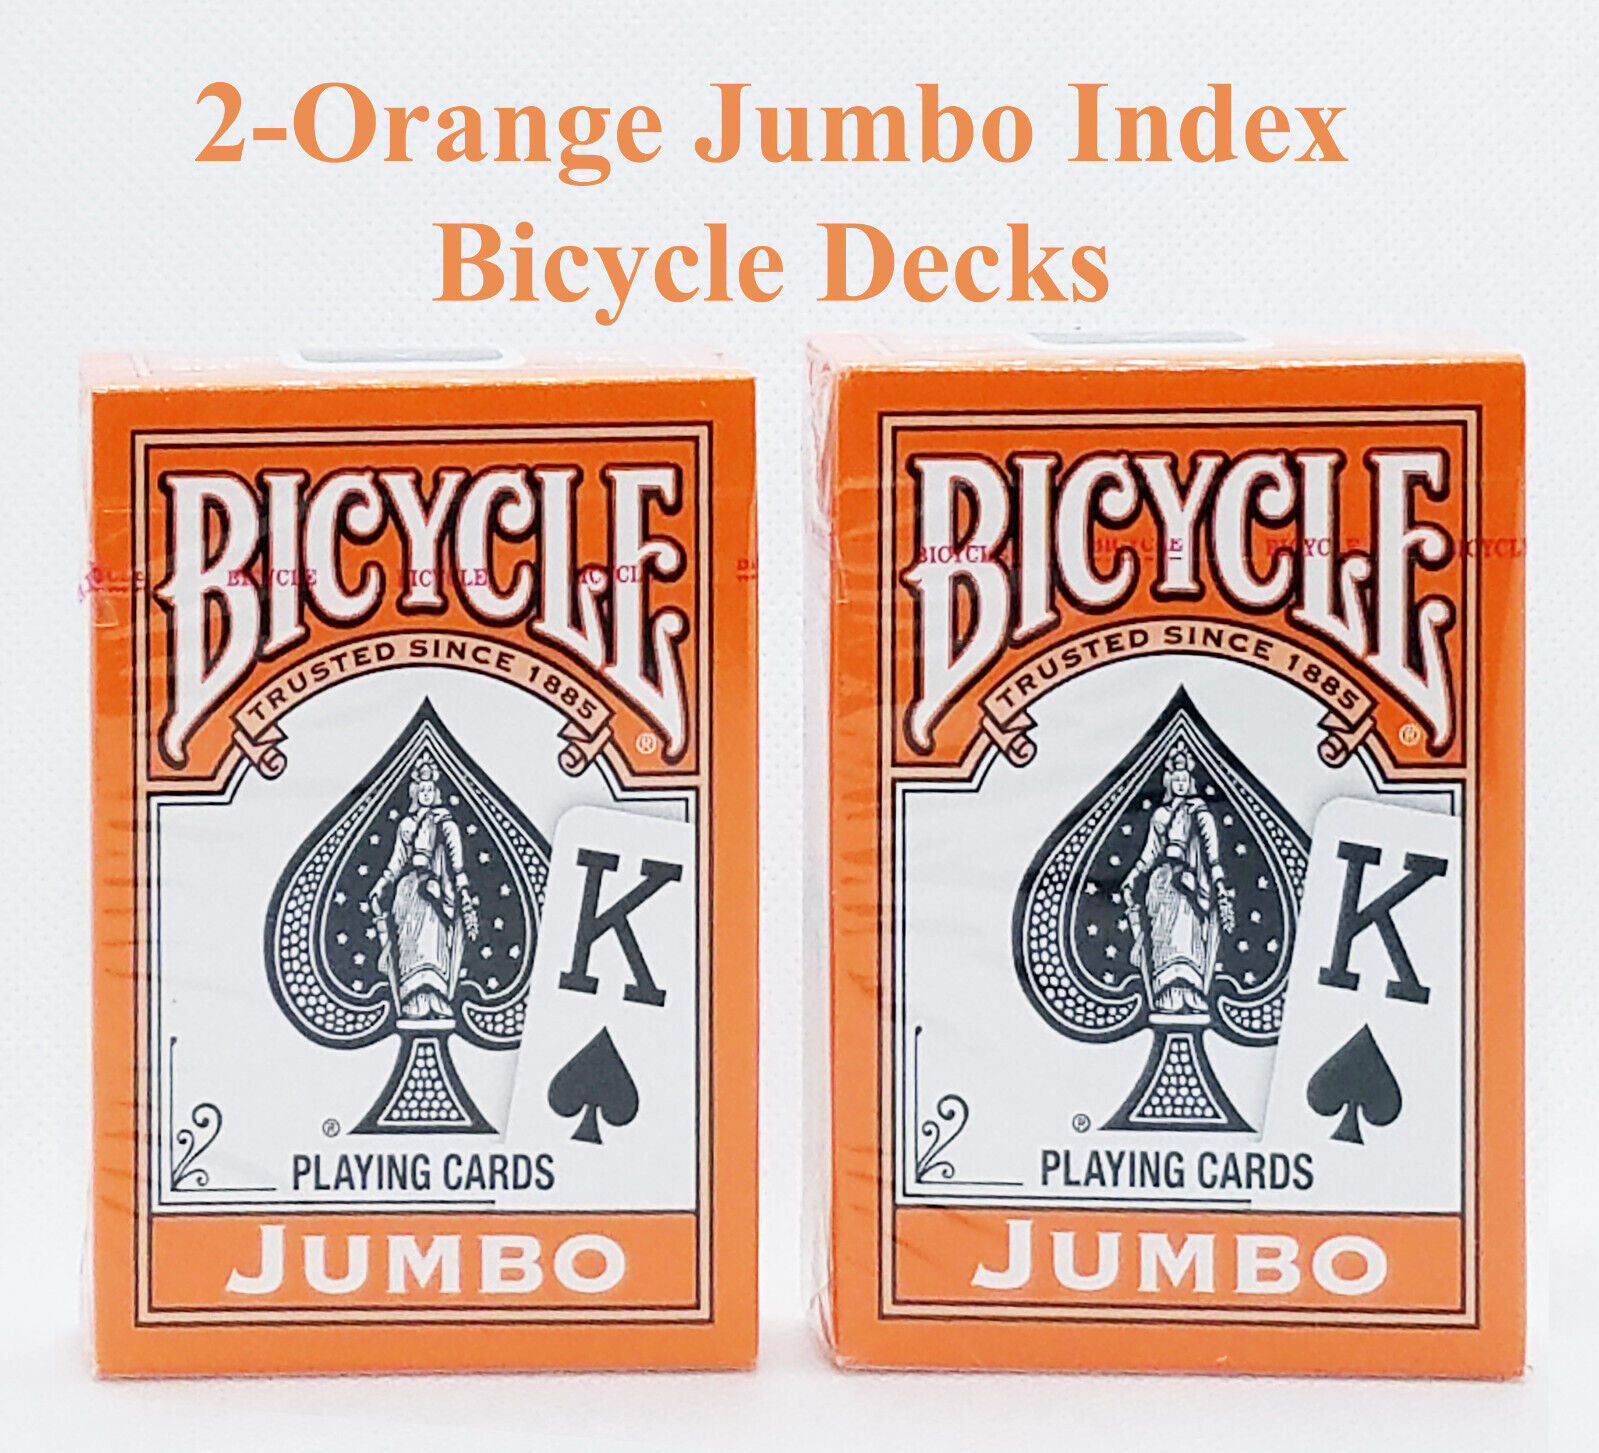 SALE OVERSTOCK 2-Orange Bicycle Jumbo Index Deck Playing Cards